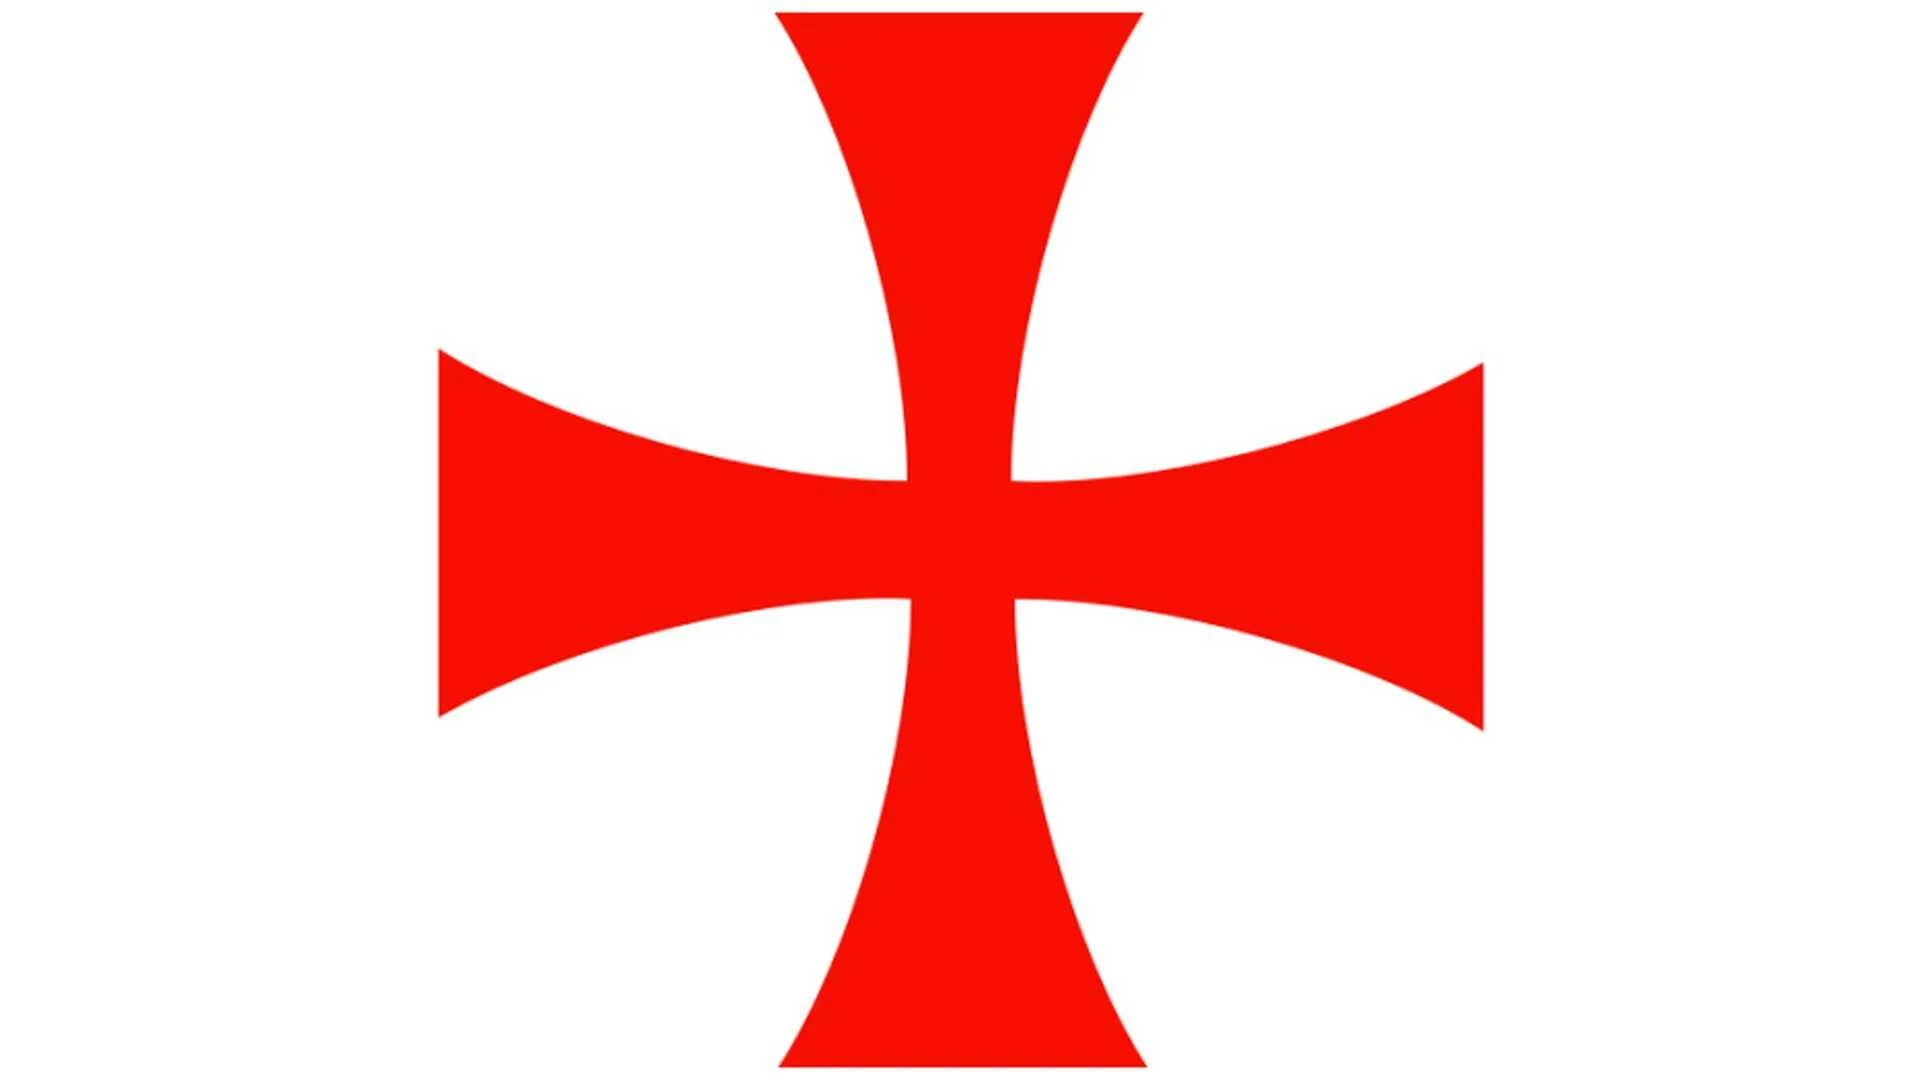 Красный крест тамплиеров Лапчатый. Тамплиерский крест. Флаг красный крест тамплиеры. Орден крестоносцев тамплиеры.